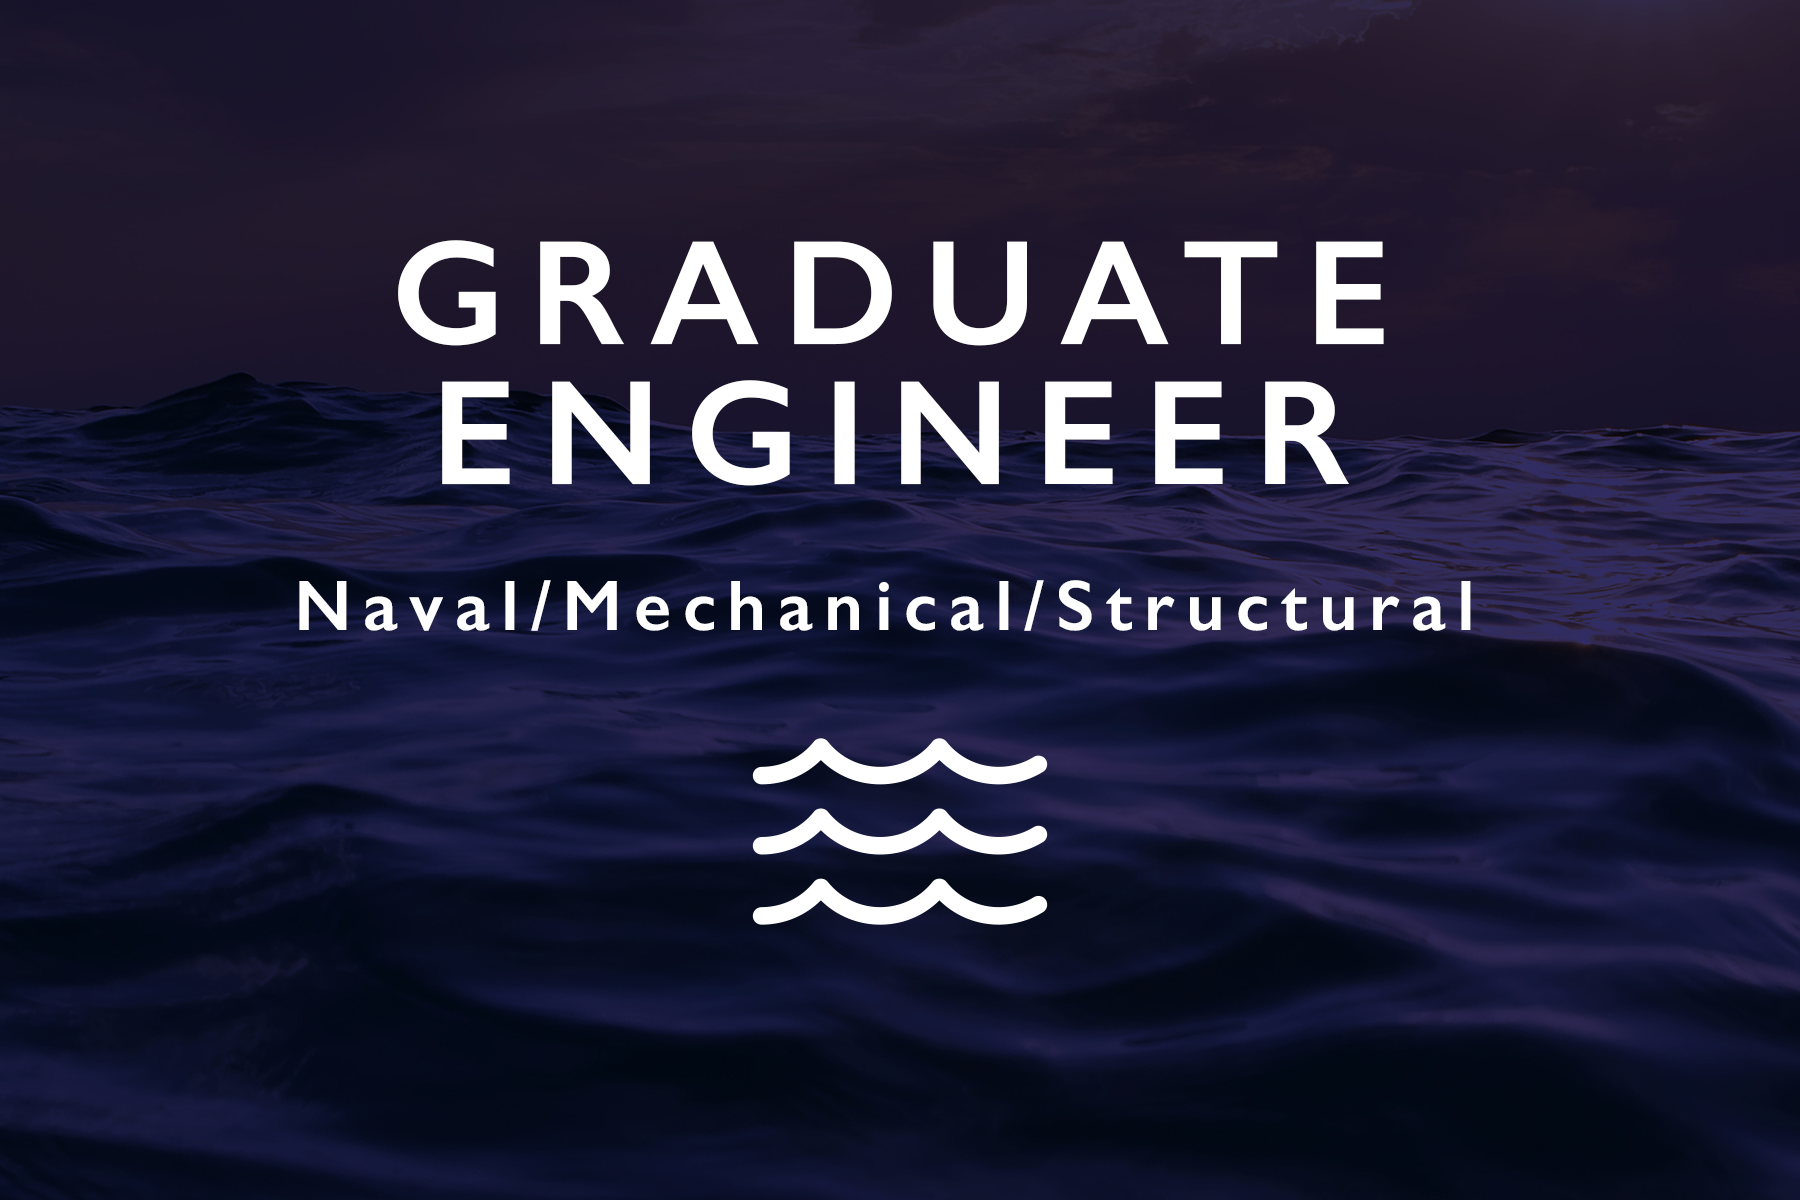 Graduate Engineer - Voe Marine Careers